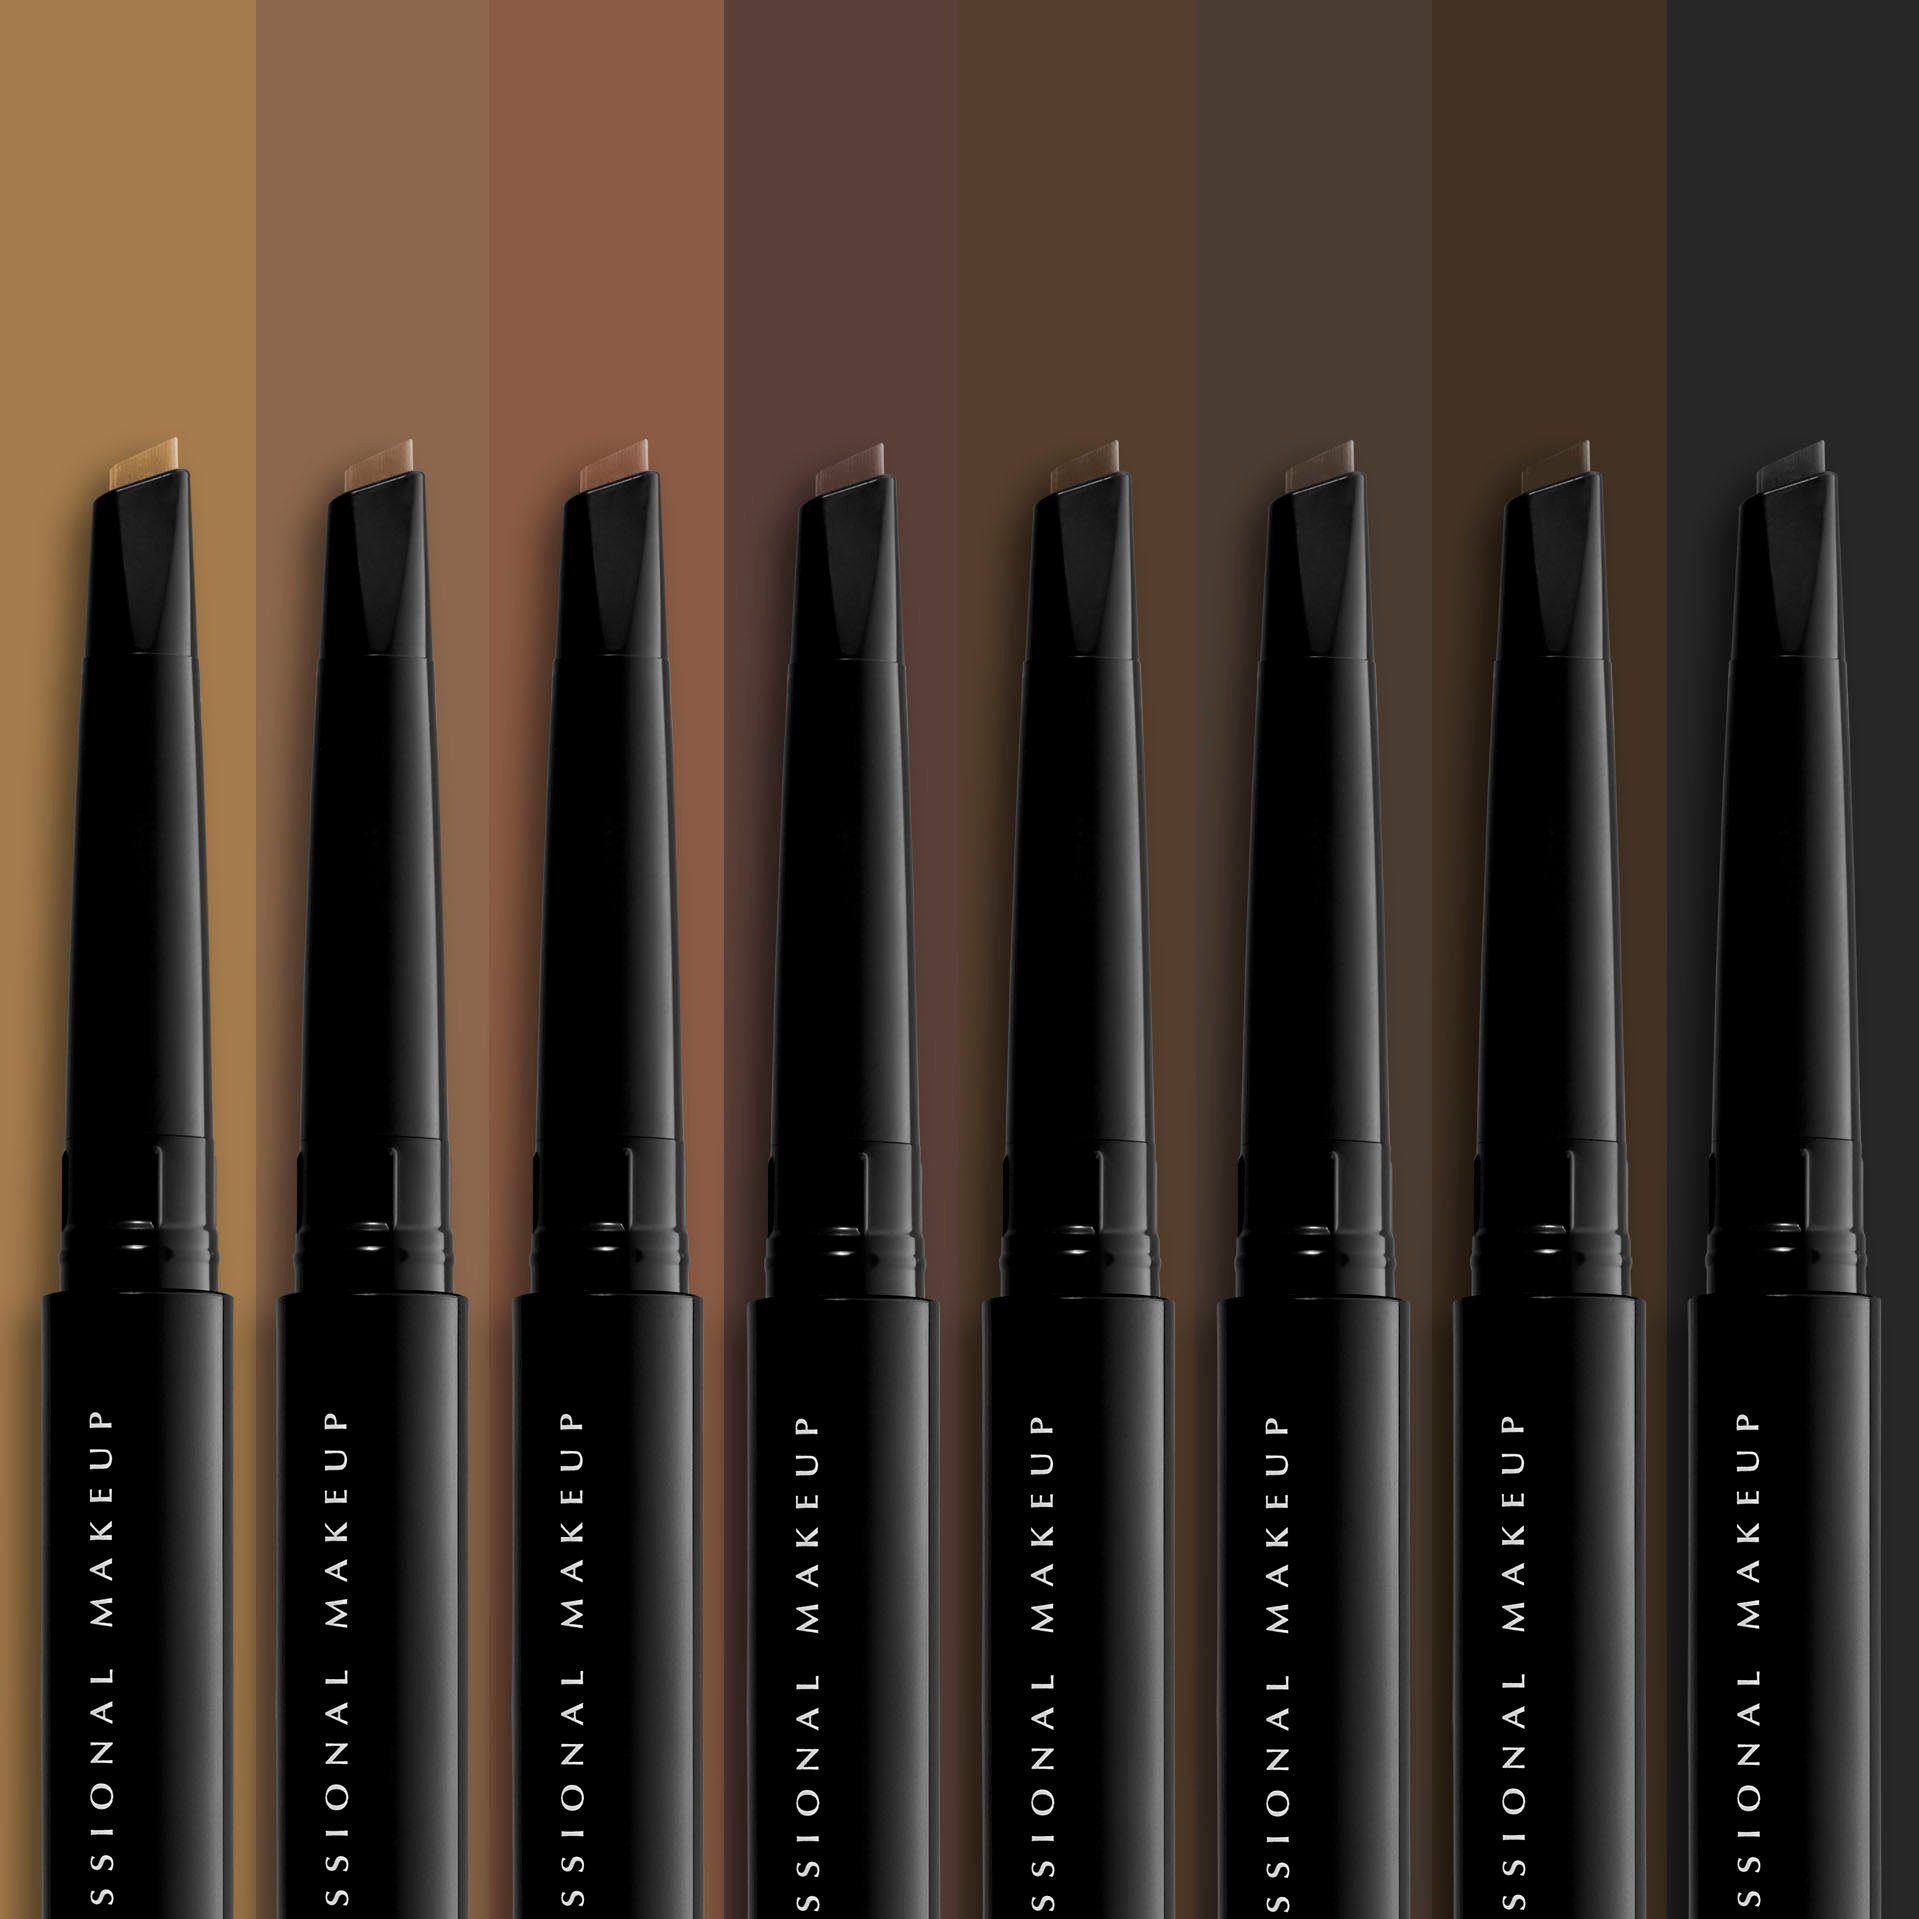 NYX Augenbrauen-Stift Professional Makeup ash Fill Pomade Fluff brown Pencil & Eyebrow